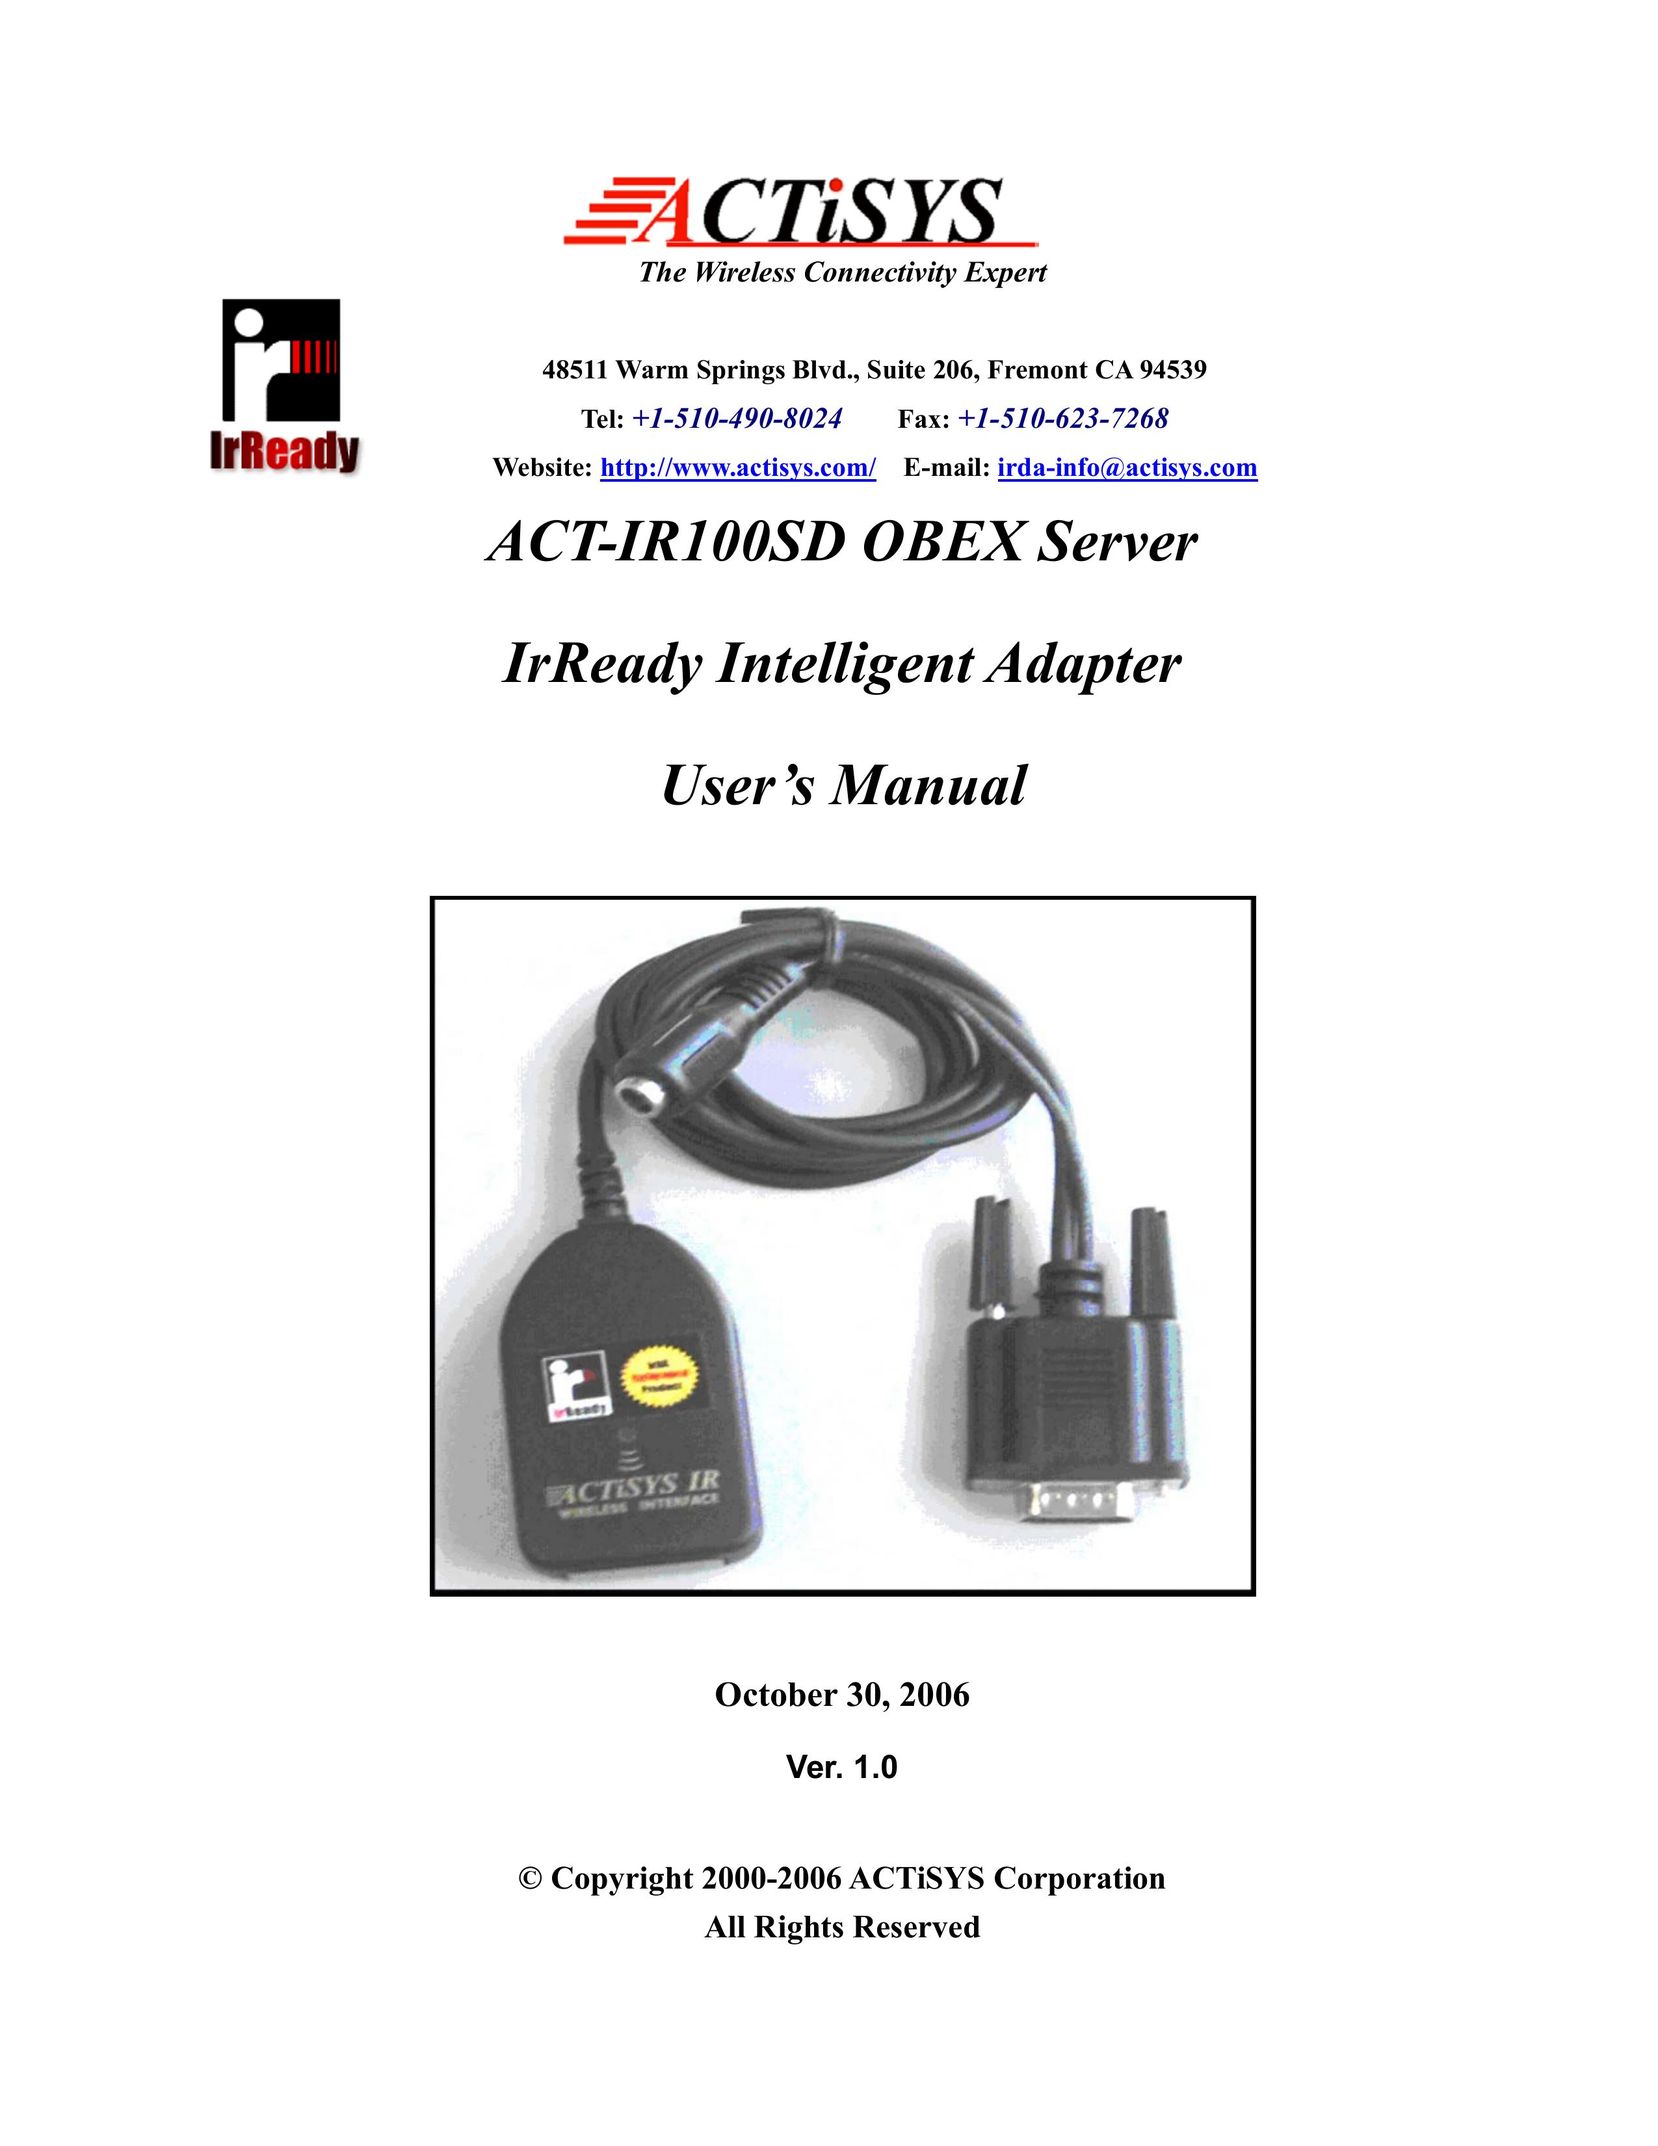 ACTiSYS ACT-IR100SD Network Card User Manual